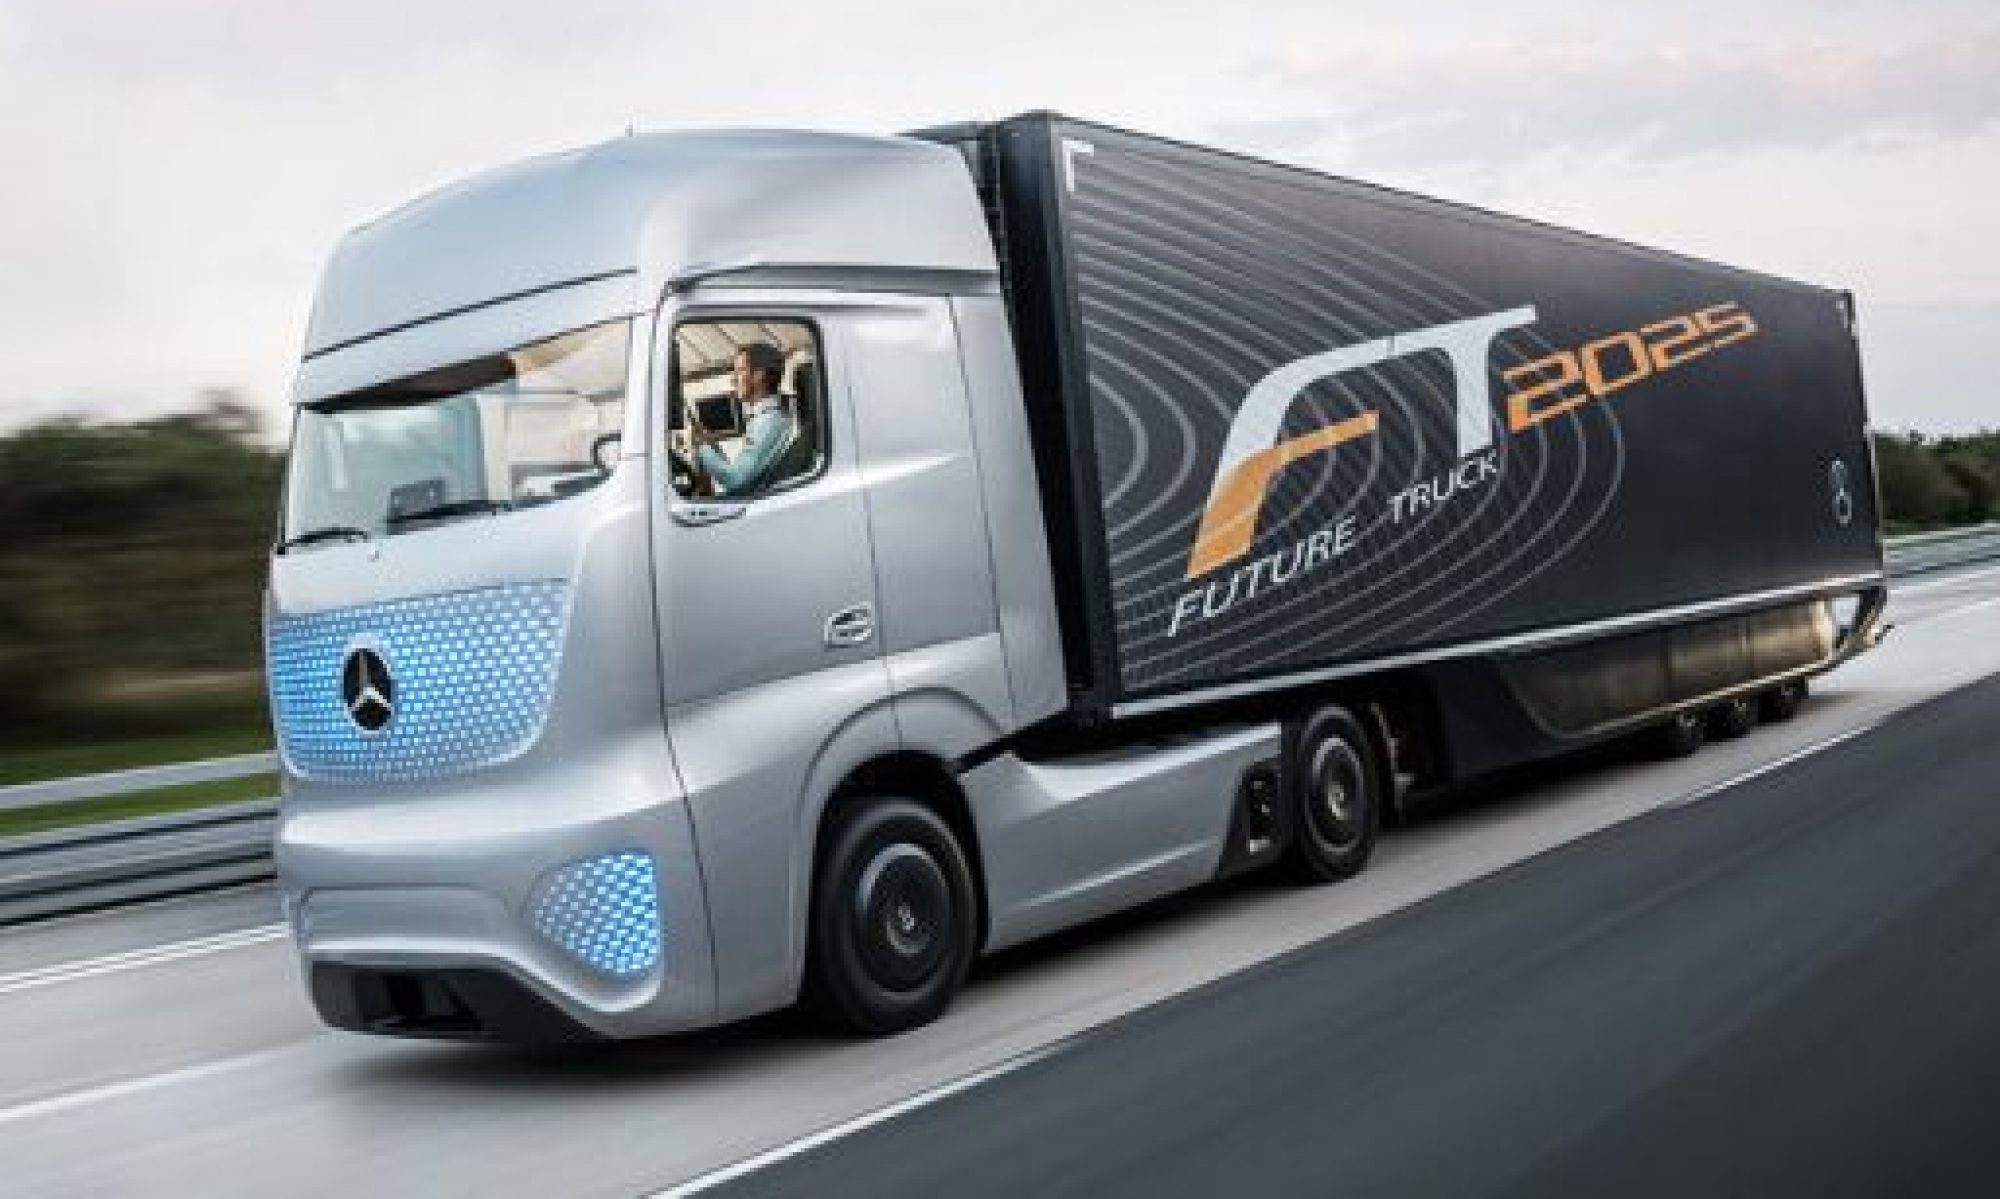 cropped-cropped-01-Mercedes-Benz-Autonomous-Truck-Logistic-Future-Truck-2025-1180x6862-1180x6861-1.jpg